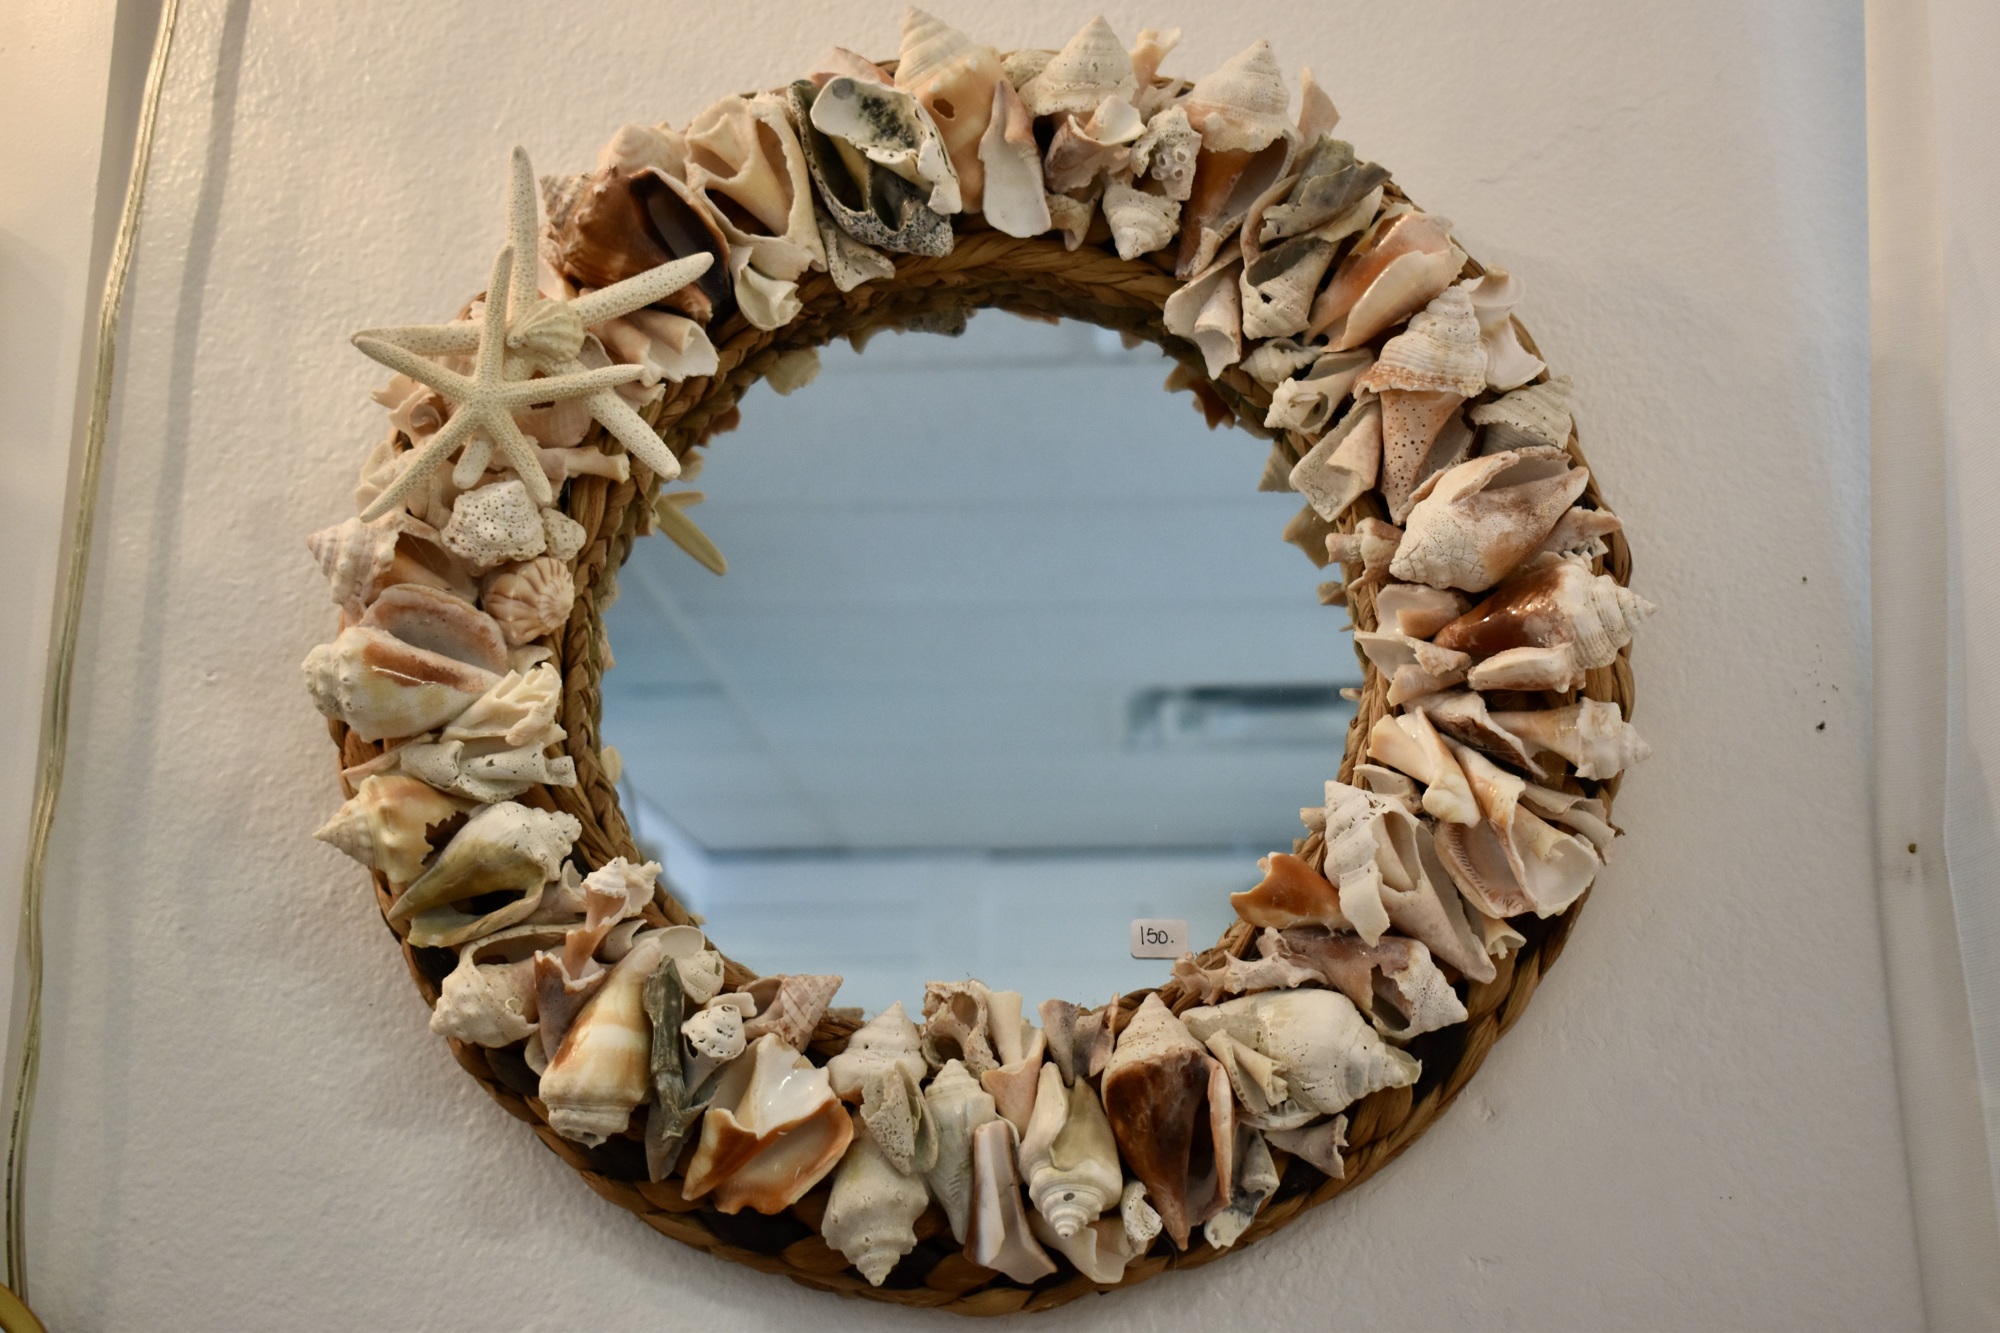 Barbara Schwan uses a lot of shells in her artwork.